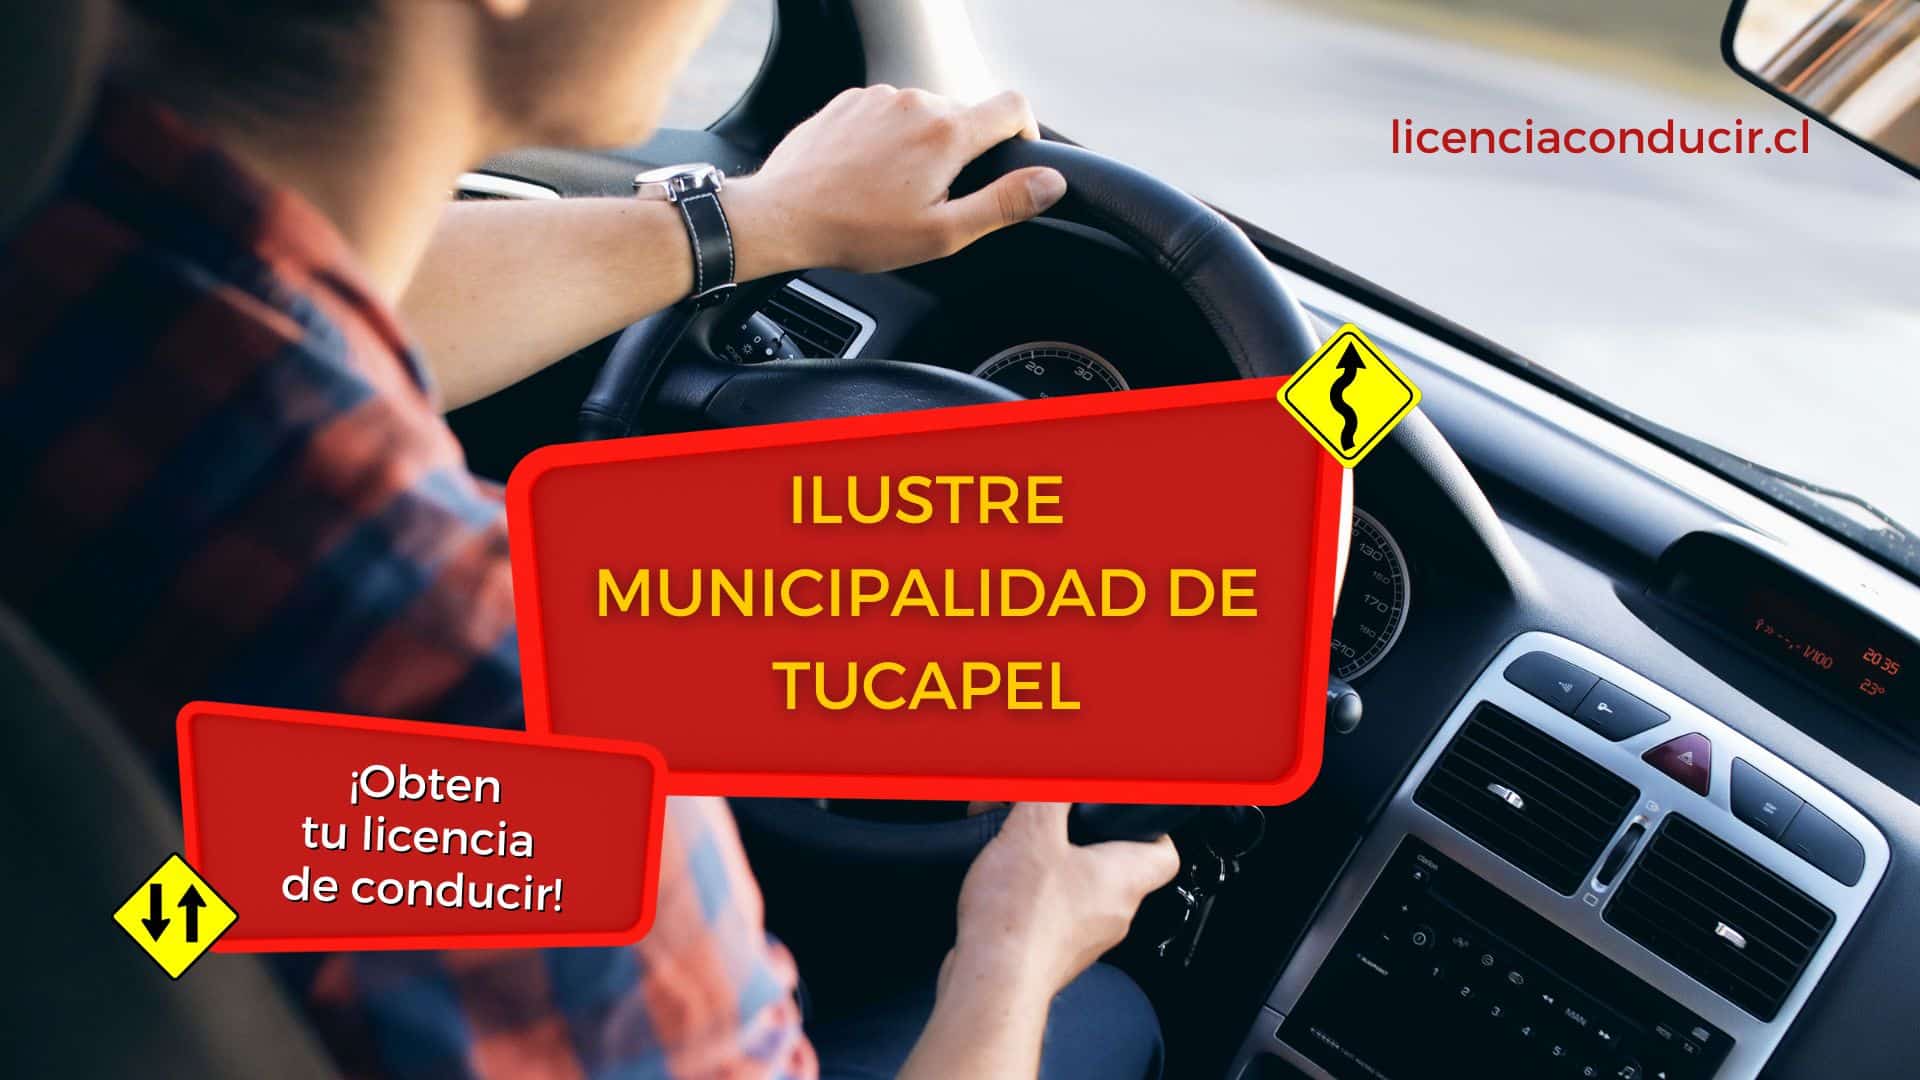 Renovar licencia conducir en tucapel